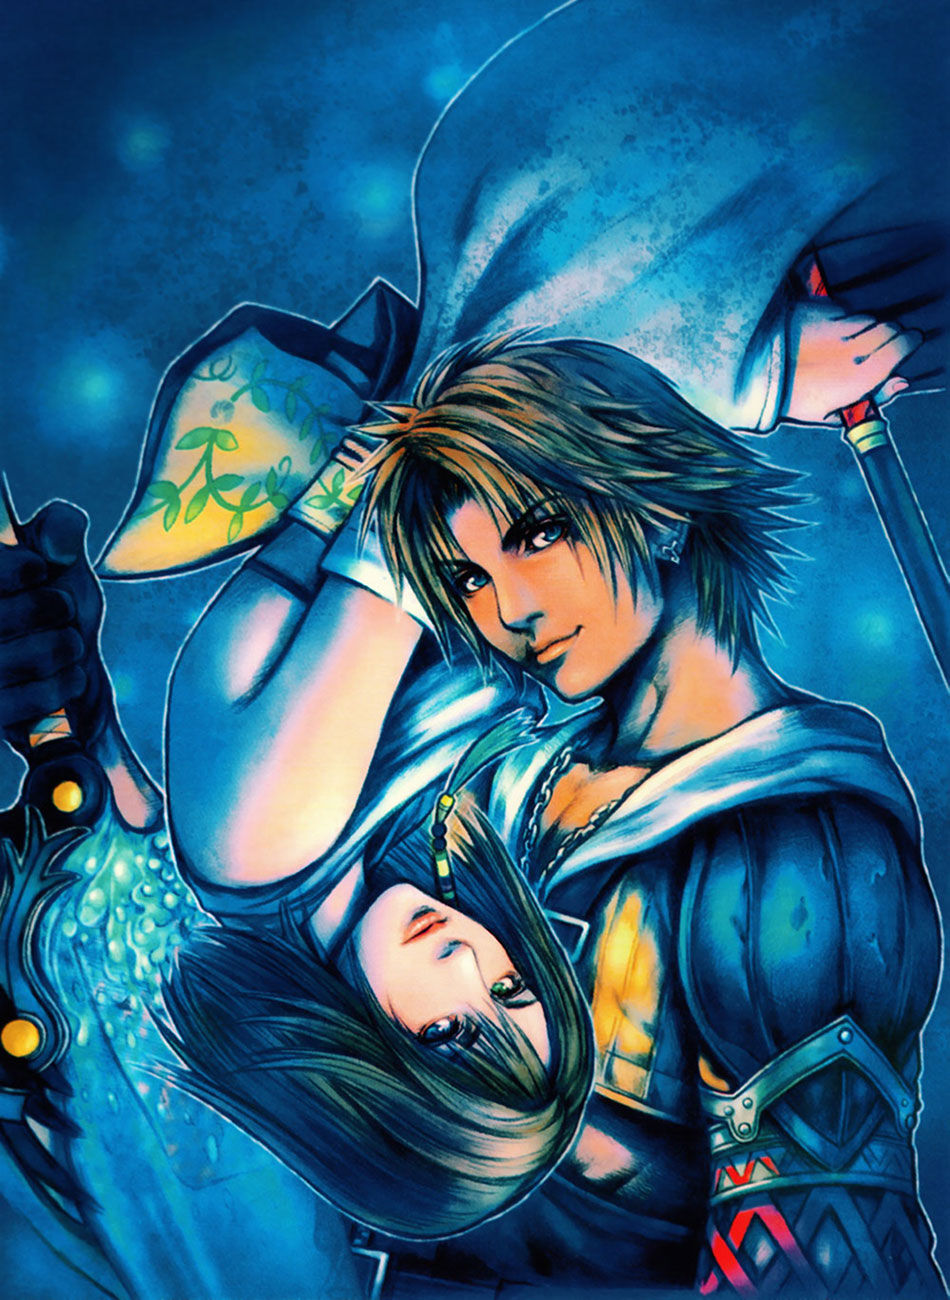 Final Fantasy X - IGN